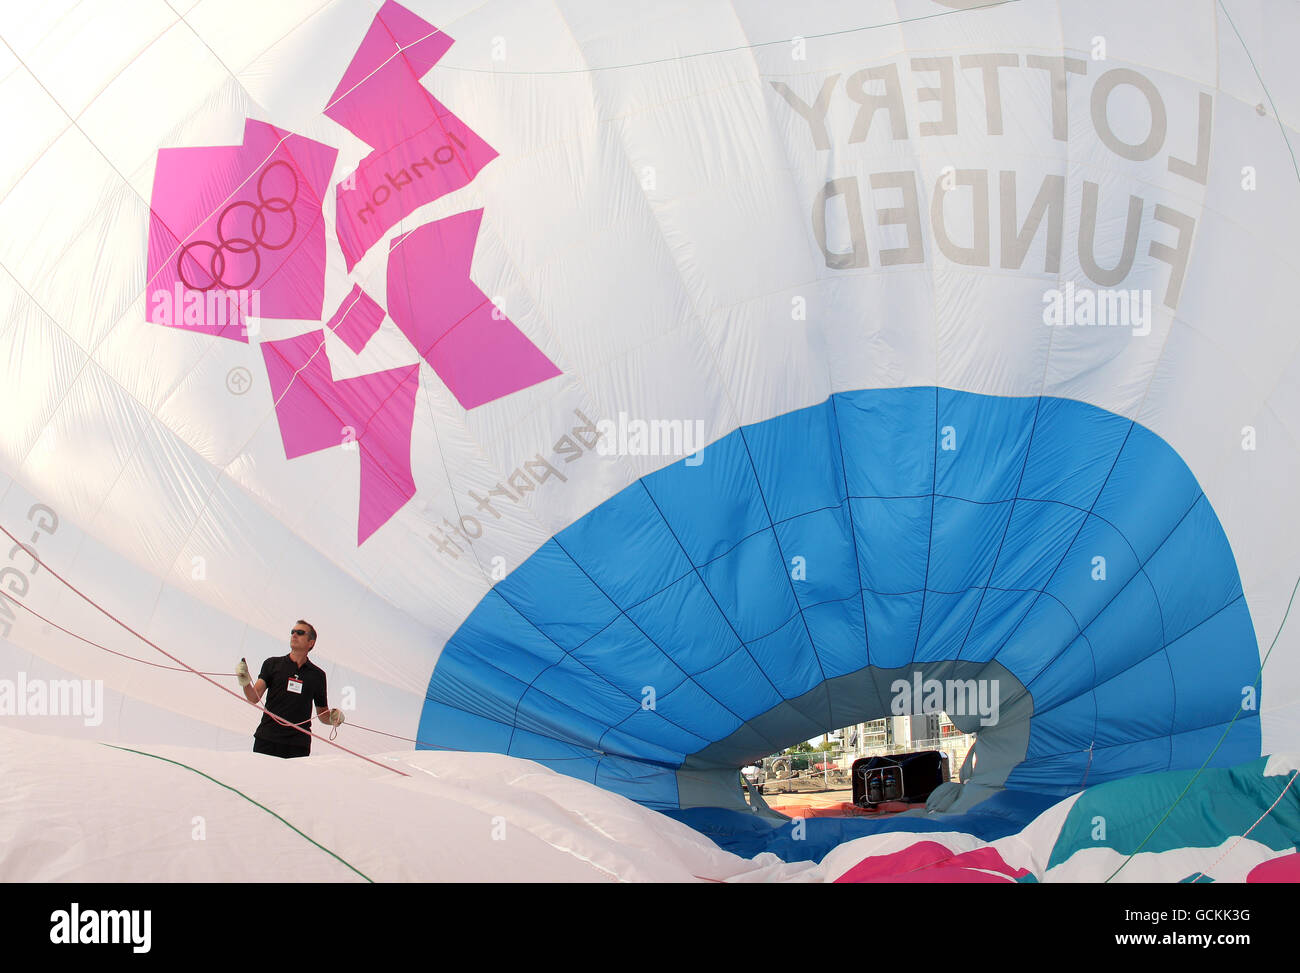 Ballonfahrer Richard Ashford bereitet den Heißluftballon National Lottery London 2012 Games vor, der im Olympic Park in Stratford, im Osten Londons, starten soll. Stockfoto